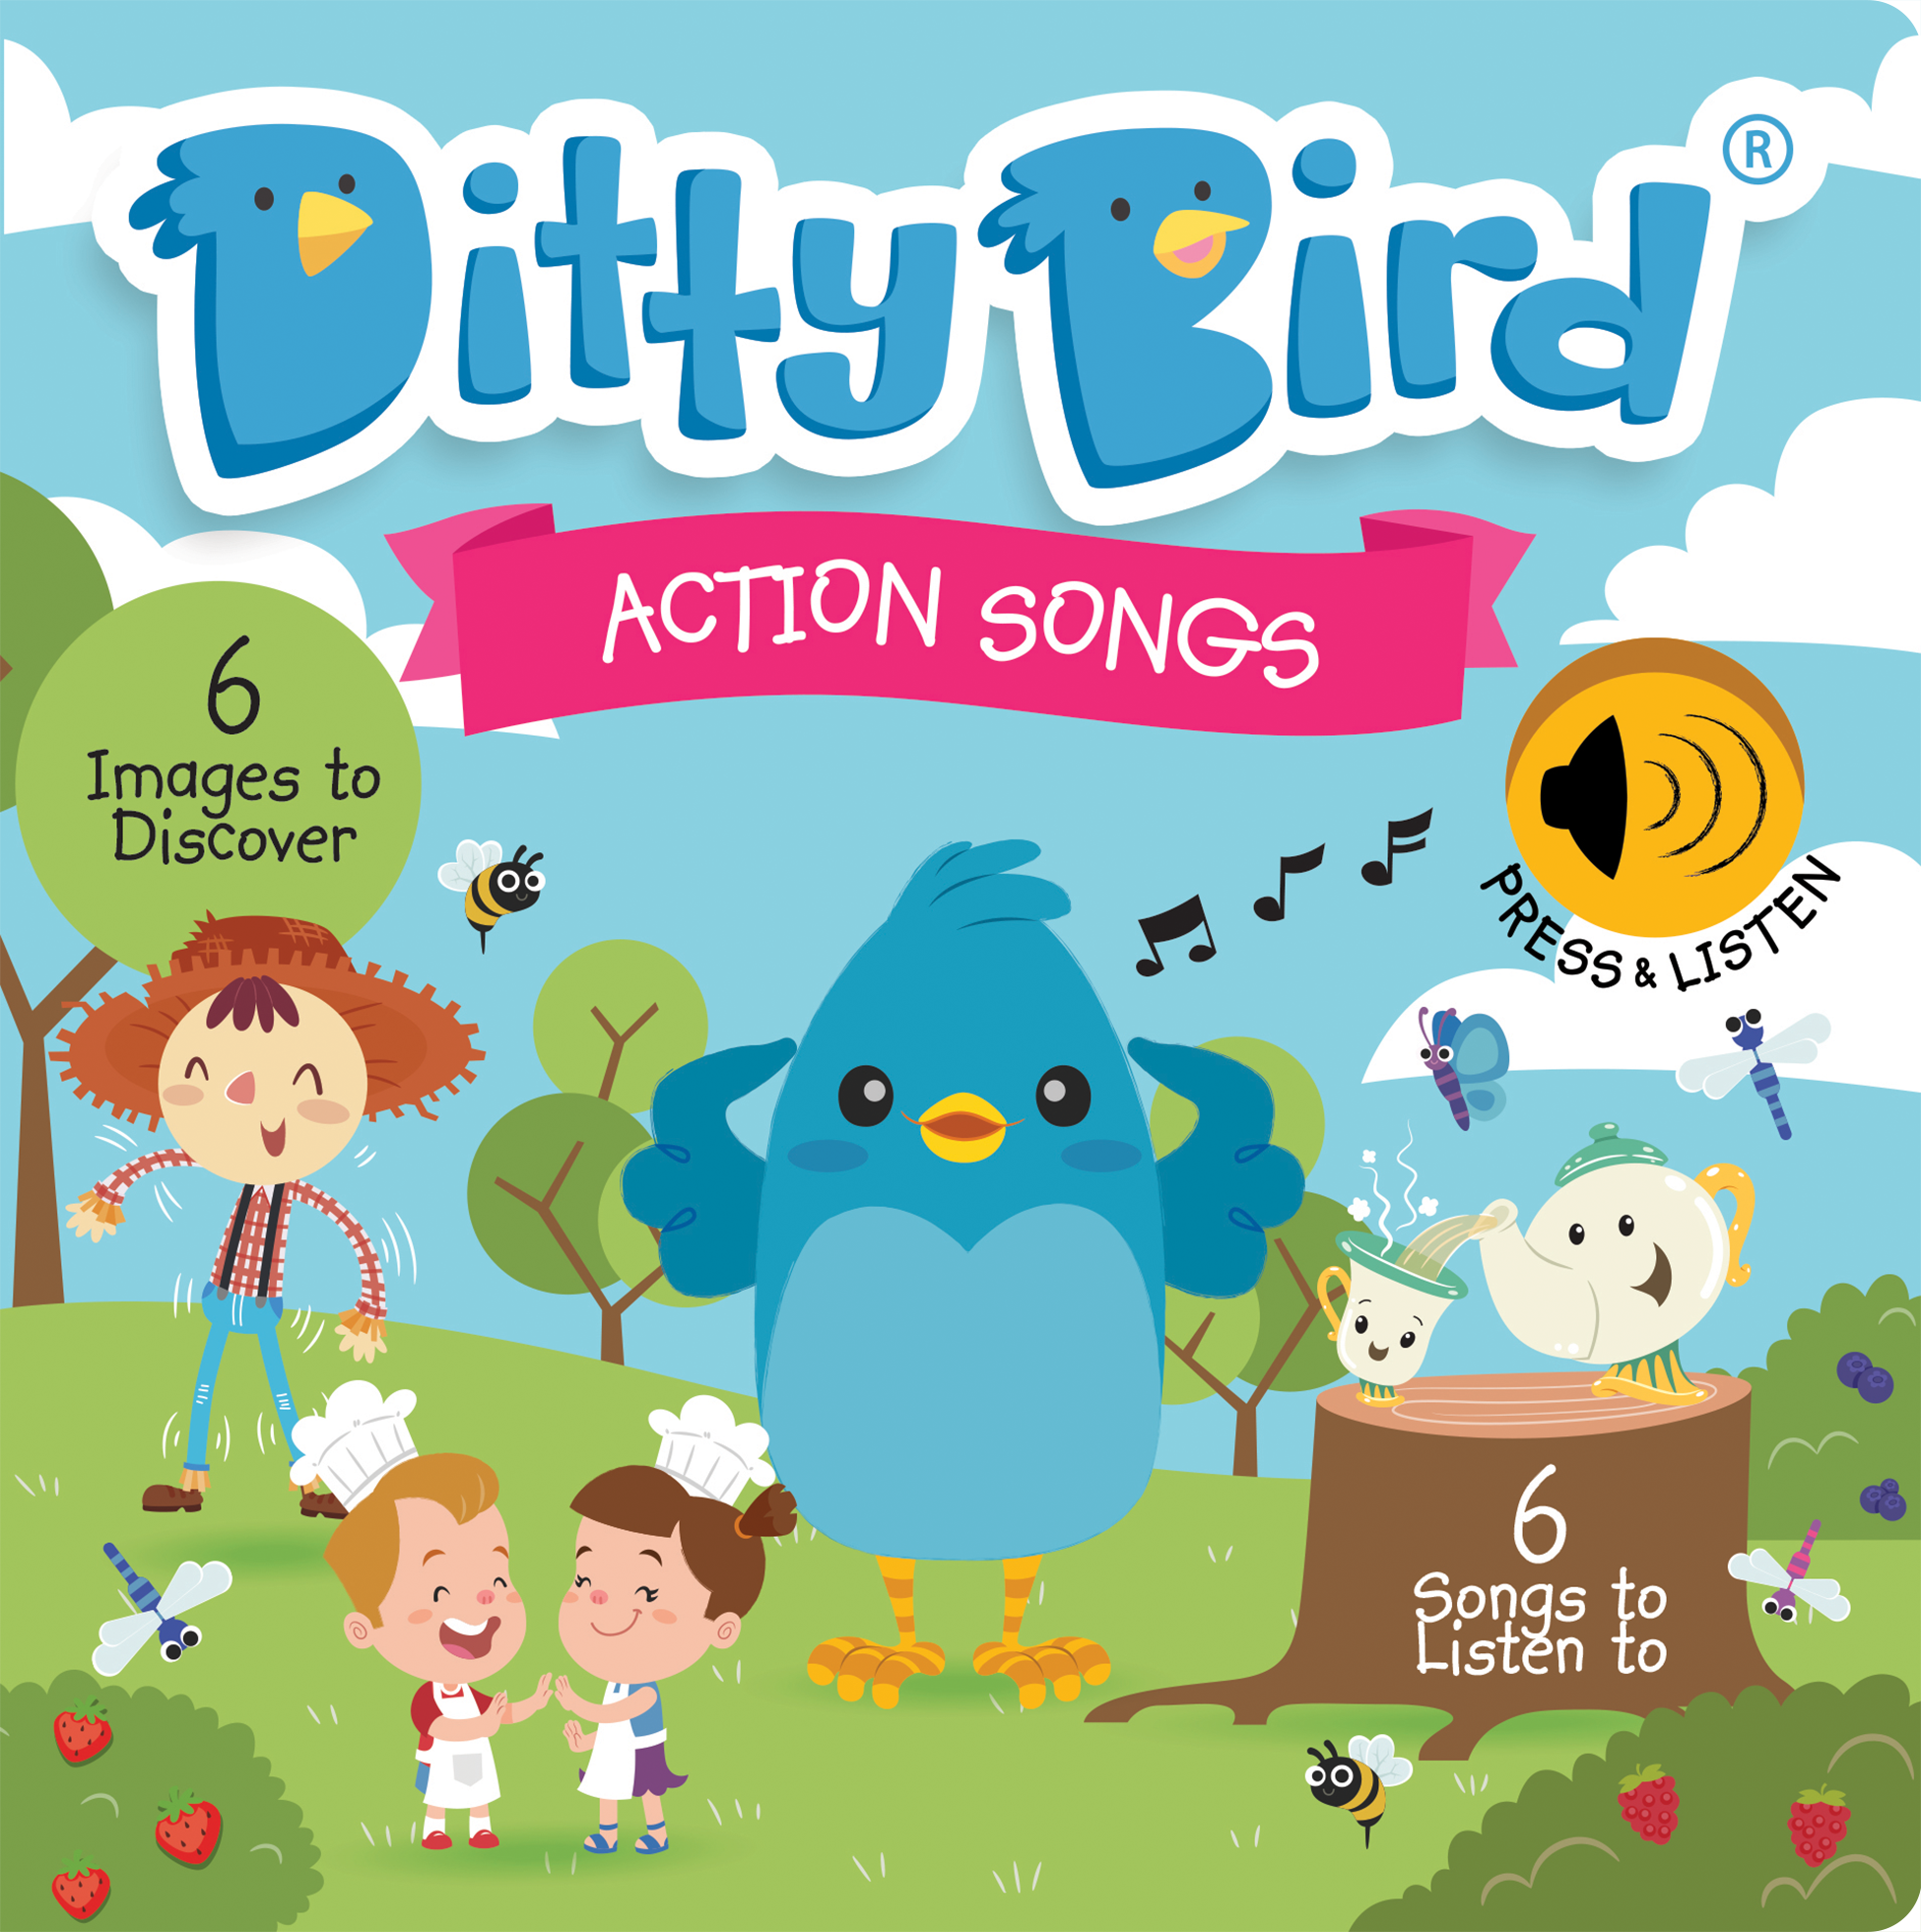 Ditty Bird Action Songs Book 